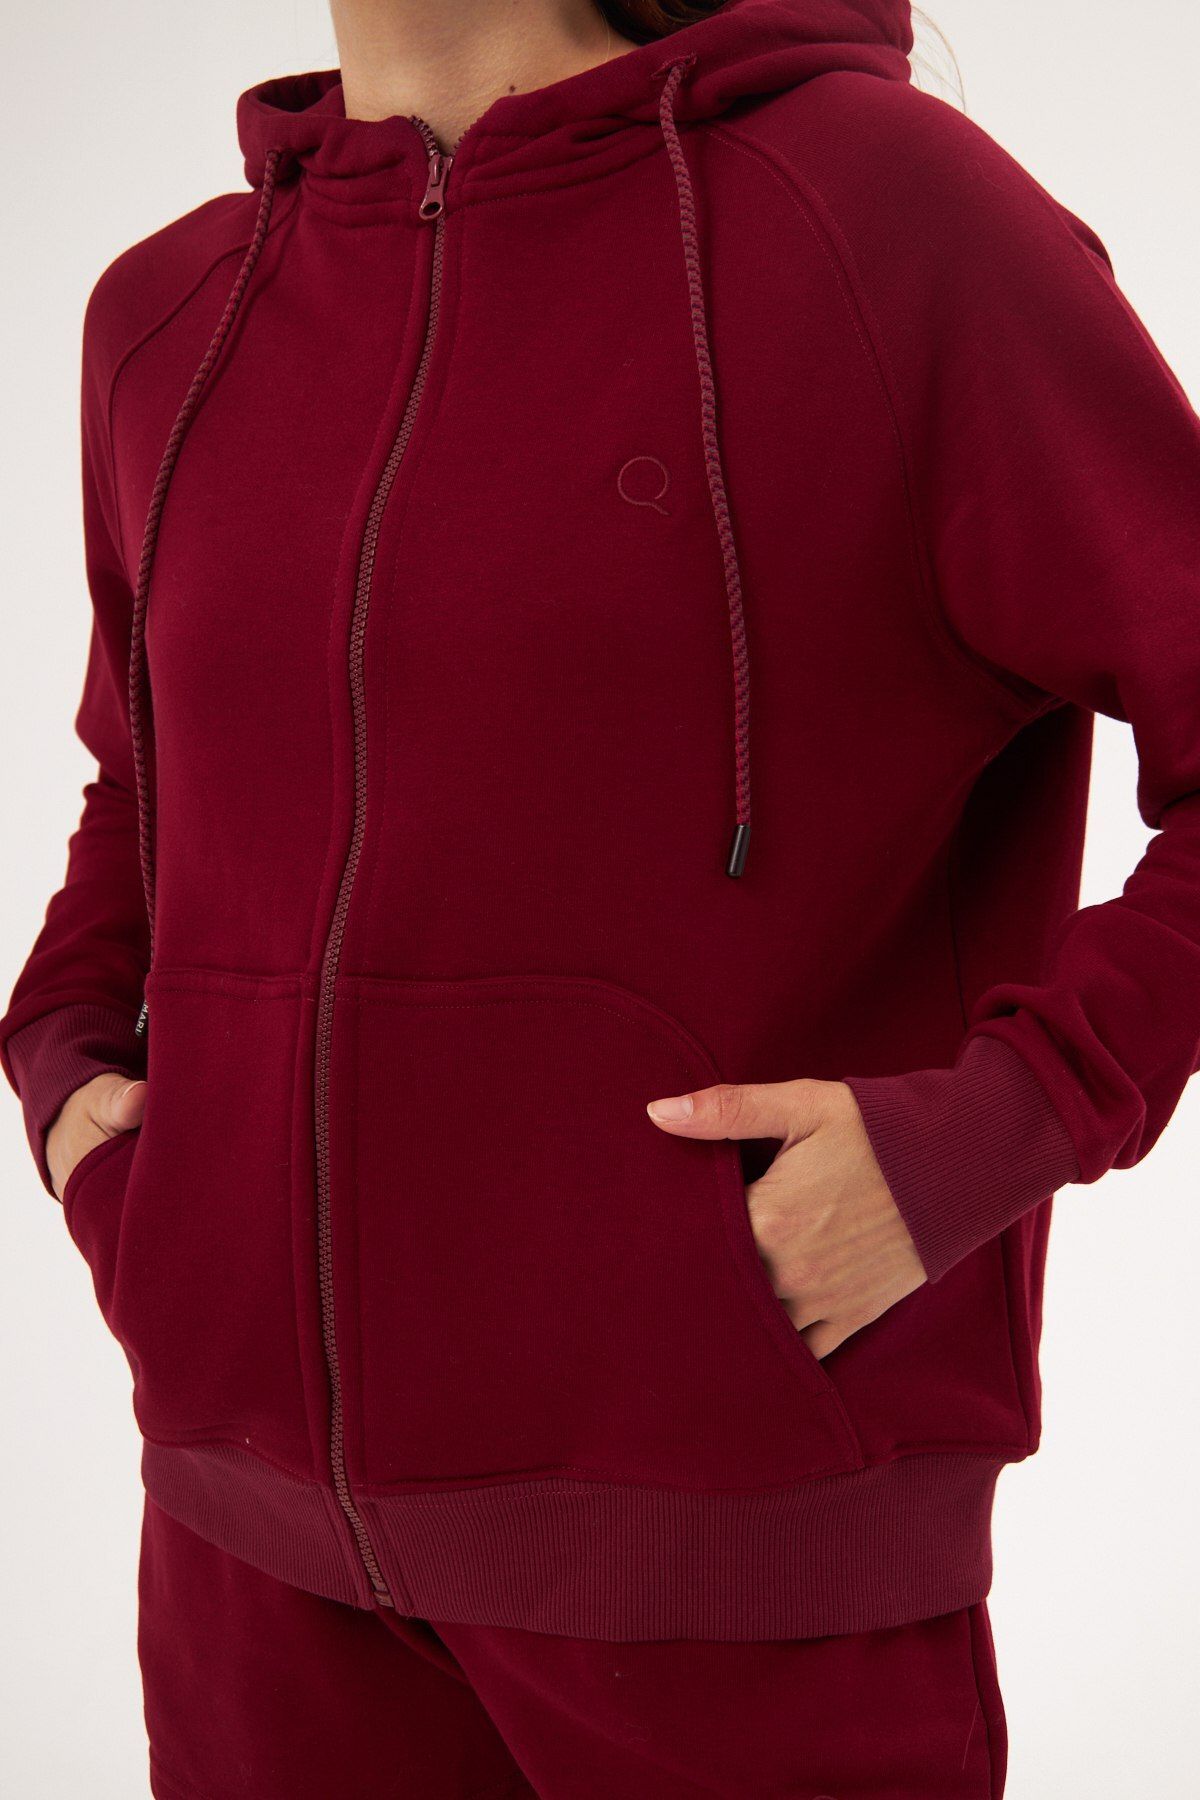 QMARI Oversize 3iplik Kapüşonlu Fermuarlı Bordo Kadın Sweatshirt - Nervür Dikişli - Nakışlı Q Logo